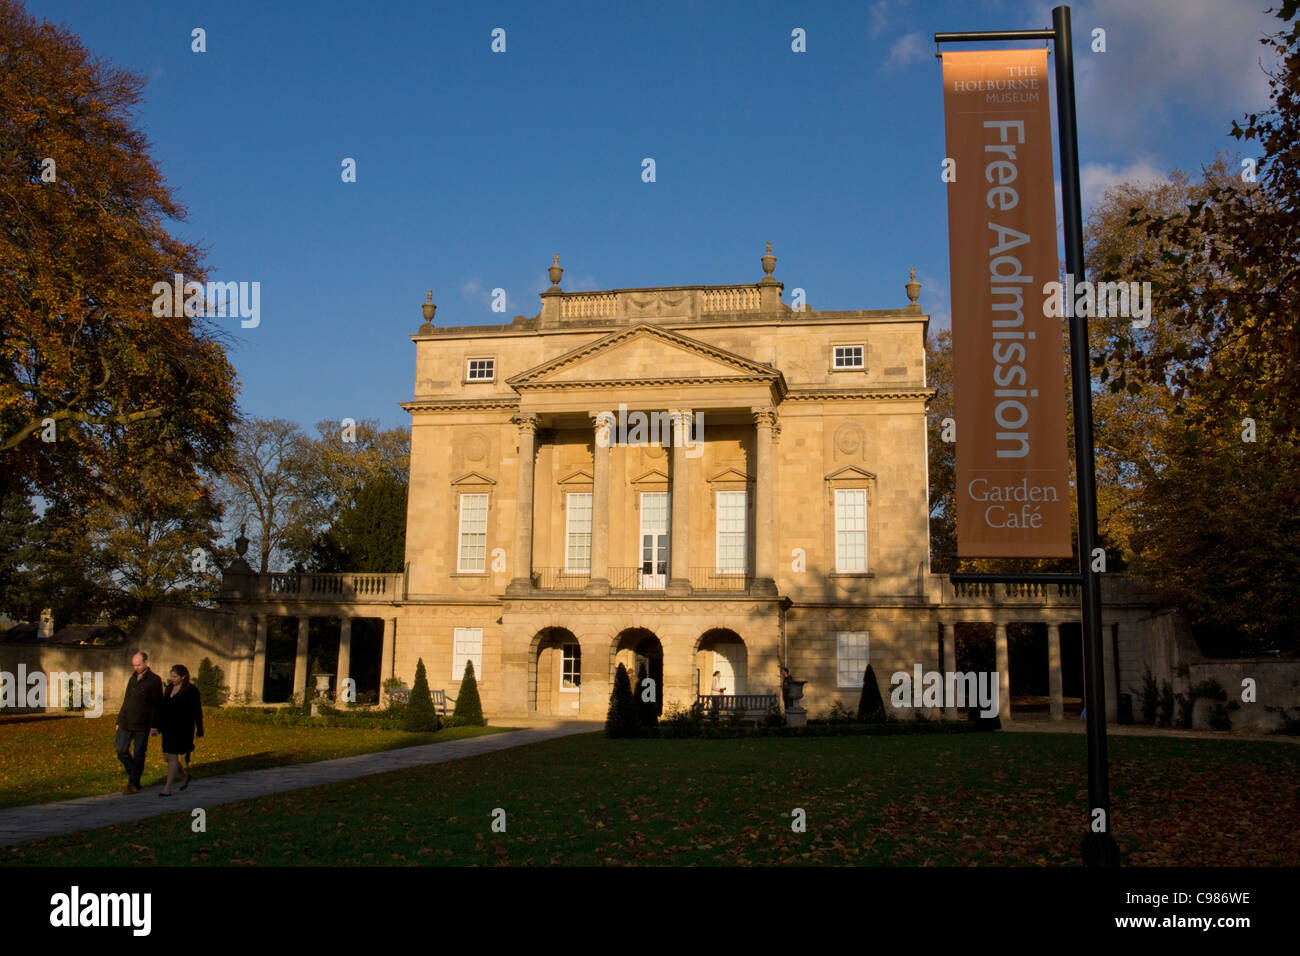 The Holburne Art Museum. Bath Somerset england UK Stock Photo